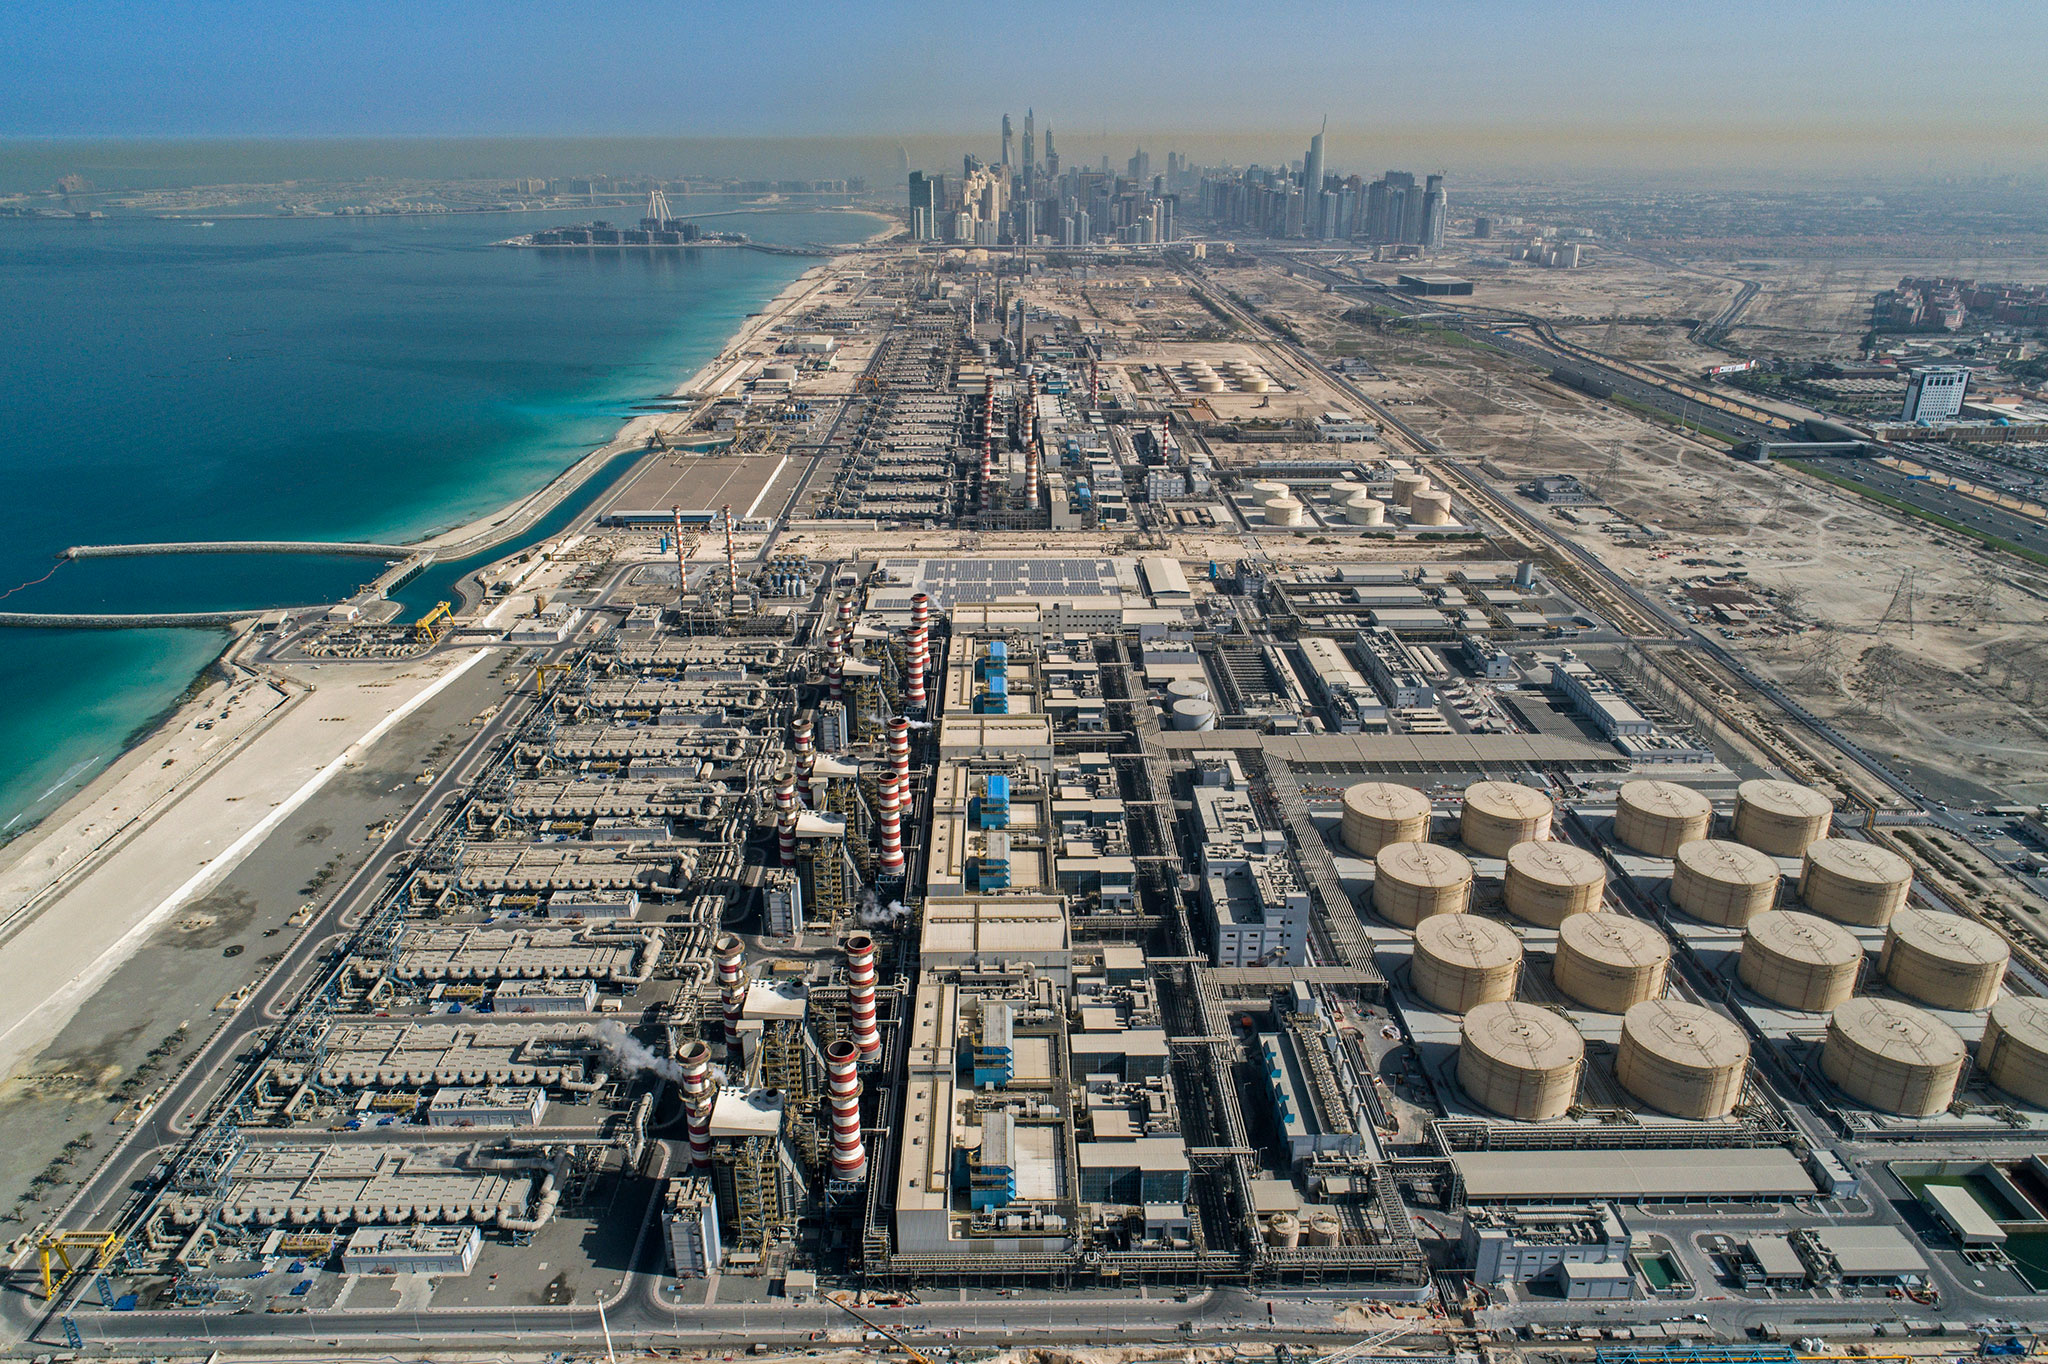 Water power plant. Дубай Jebel Ali. Завод по опреснению морской воды в ОАЭ. Порт Jebel Ali Дубай.